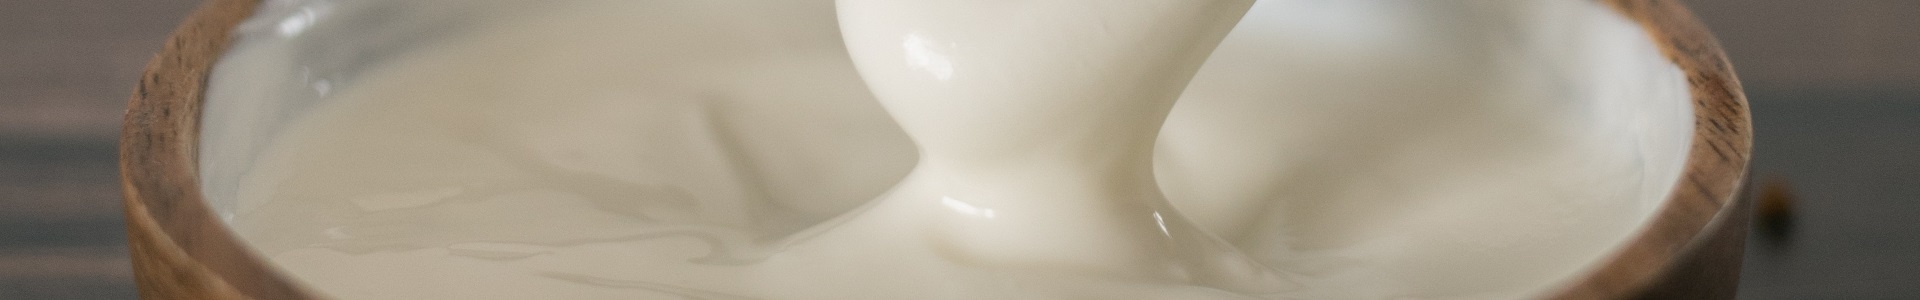 yoghurt probiotic for gut health